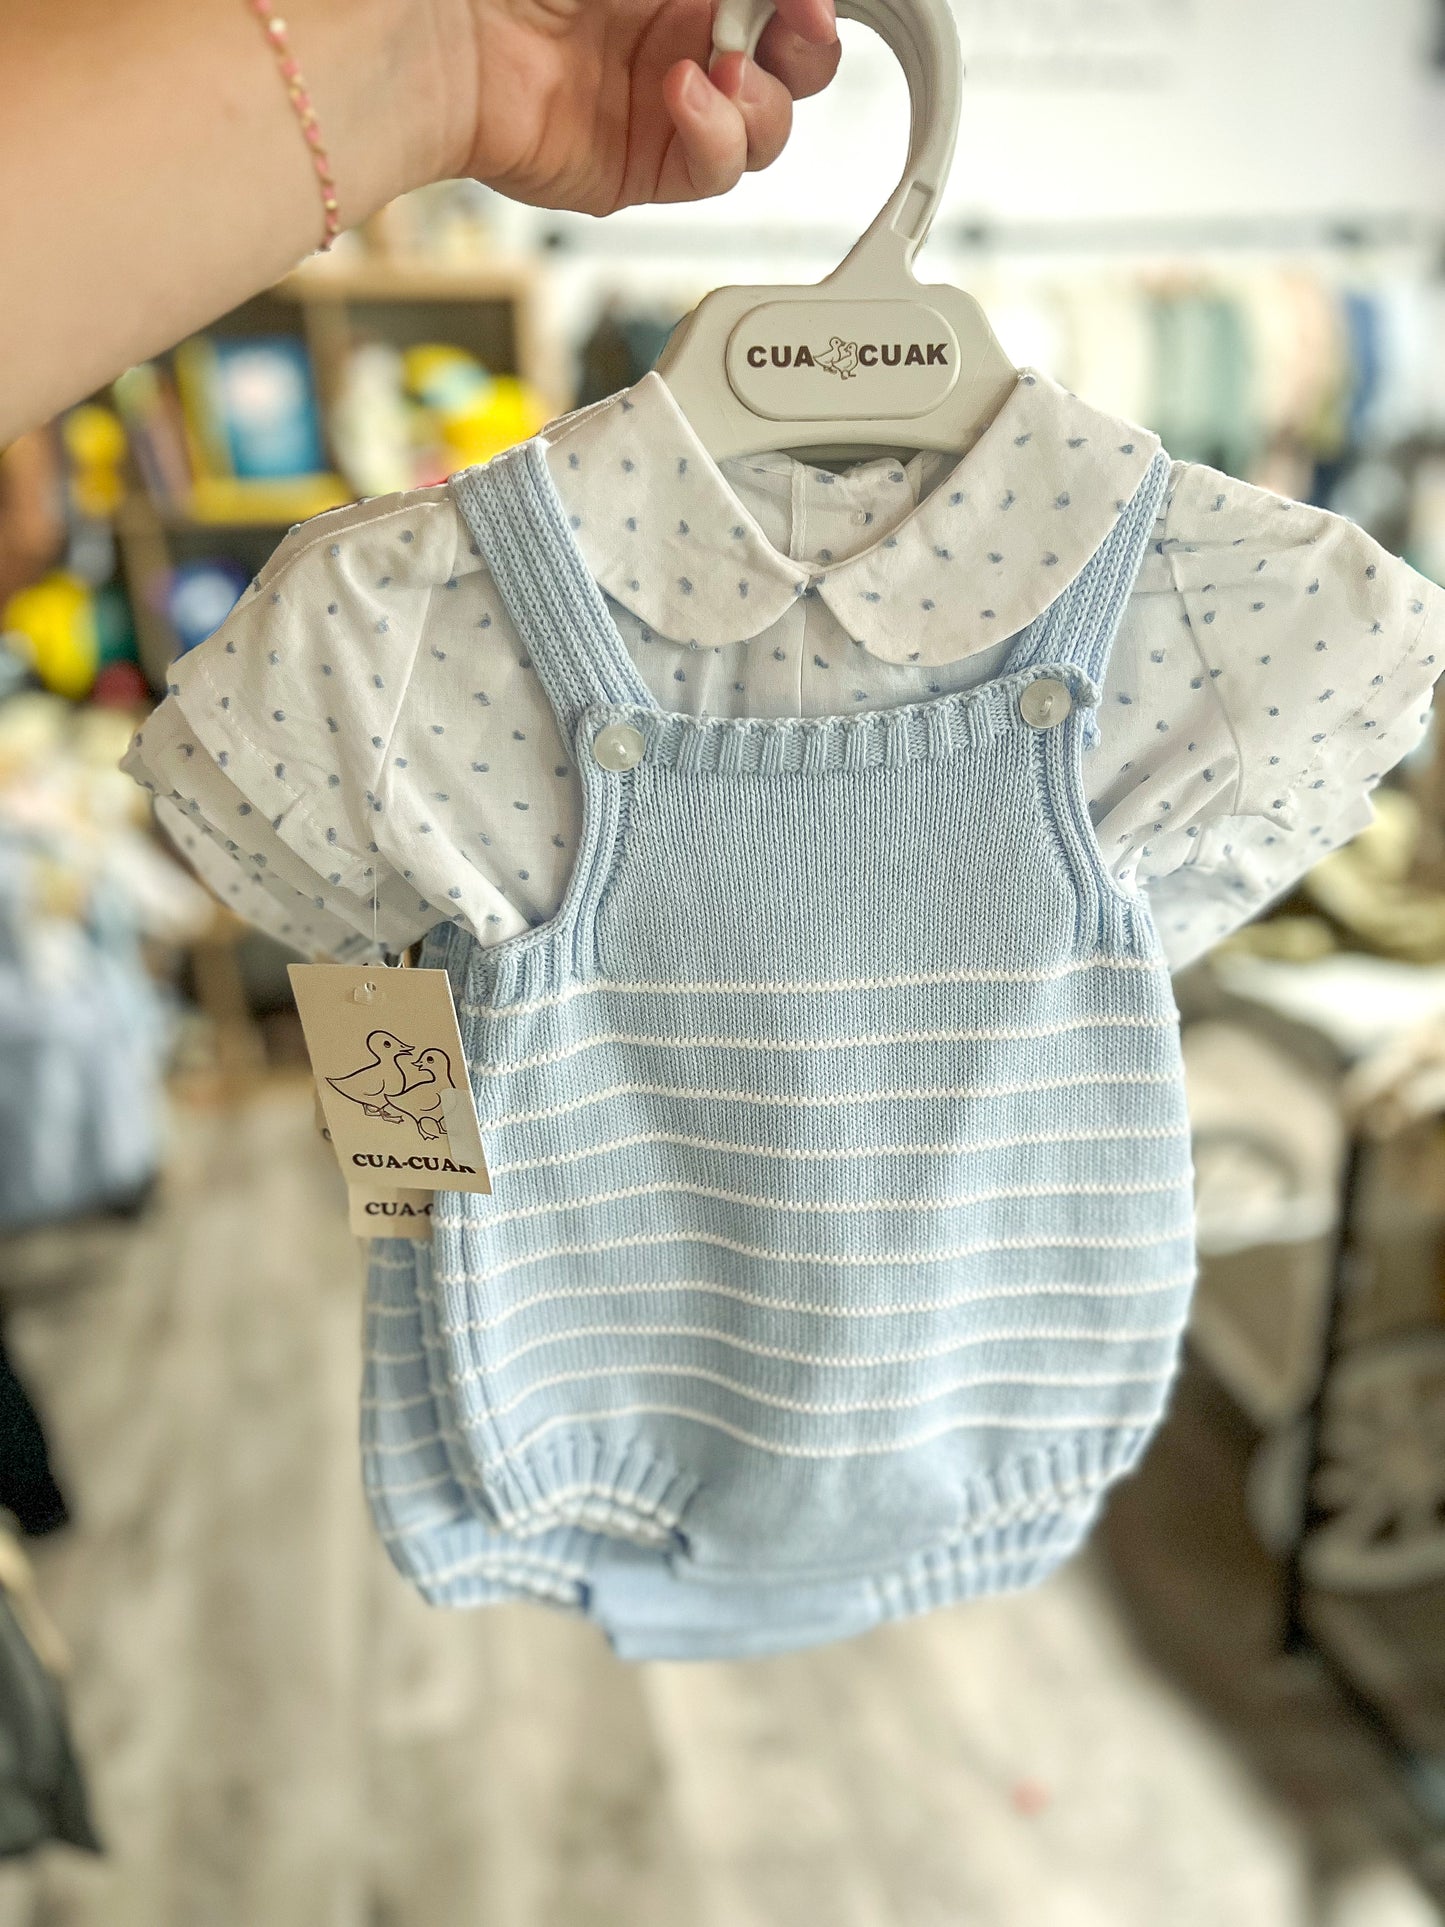 Baby Blue Knit Nino Set